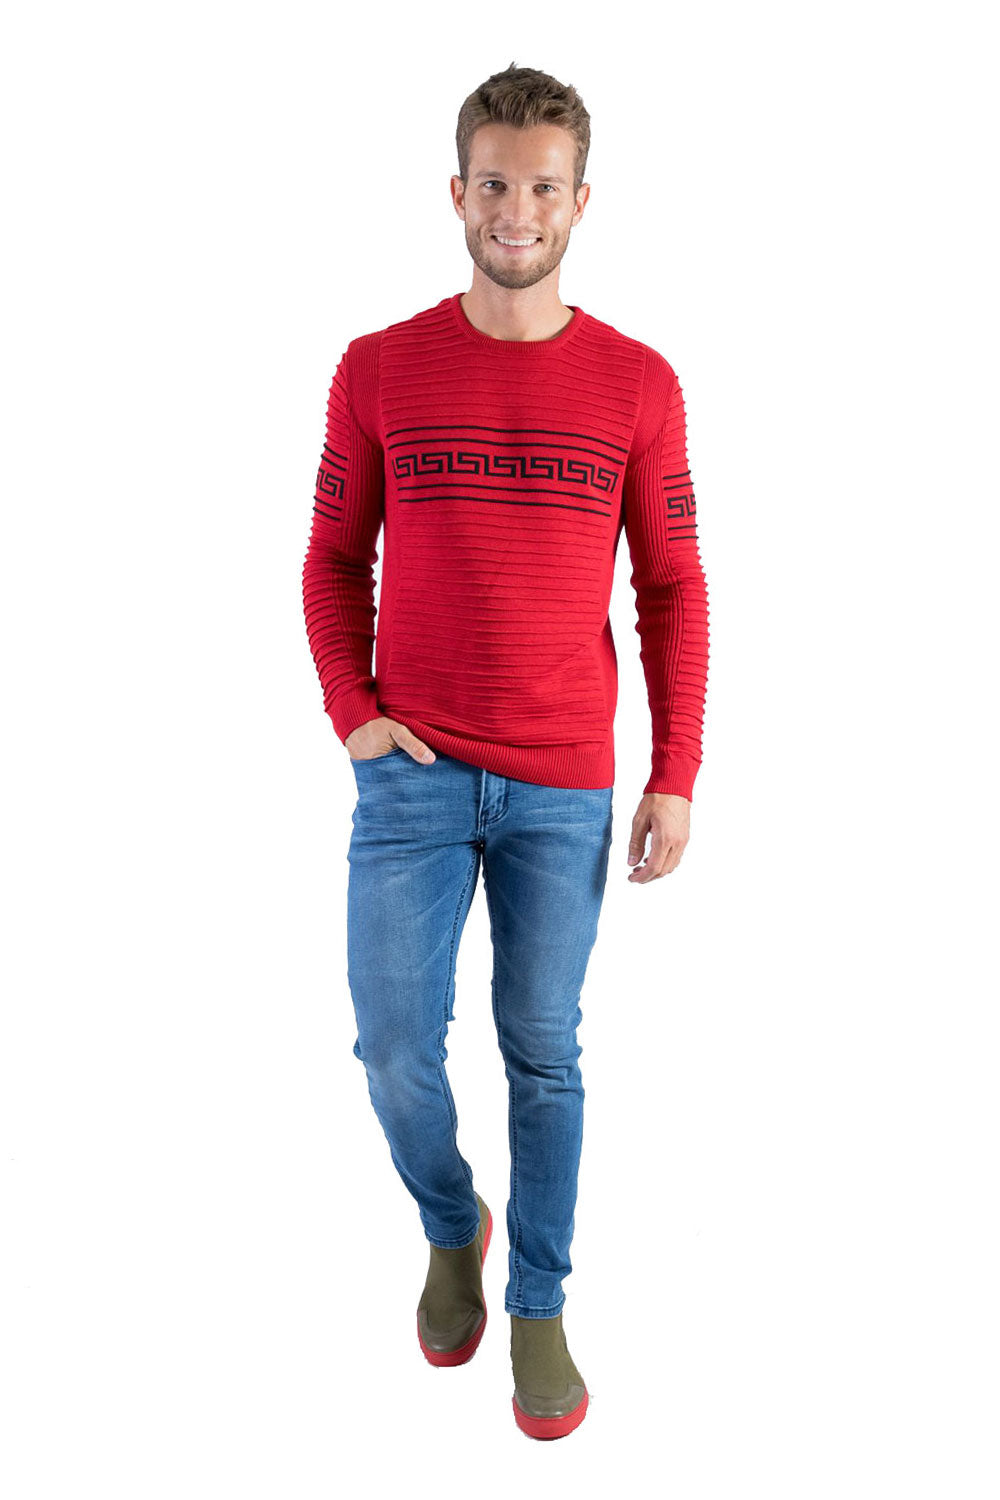 Barabas Men's Solid Color Greek Pattern Crew Neck Sweaters LS226